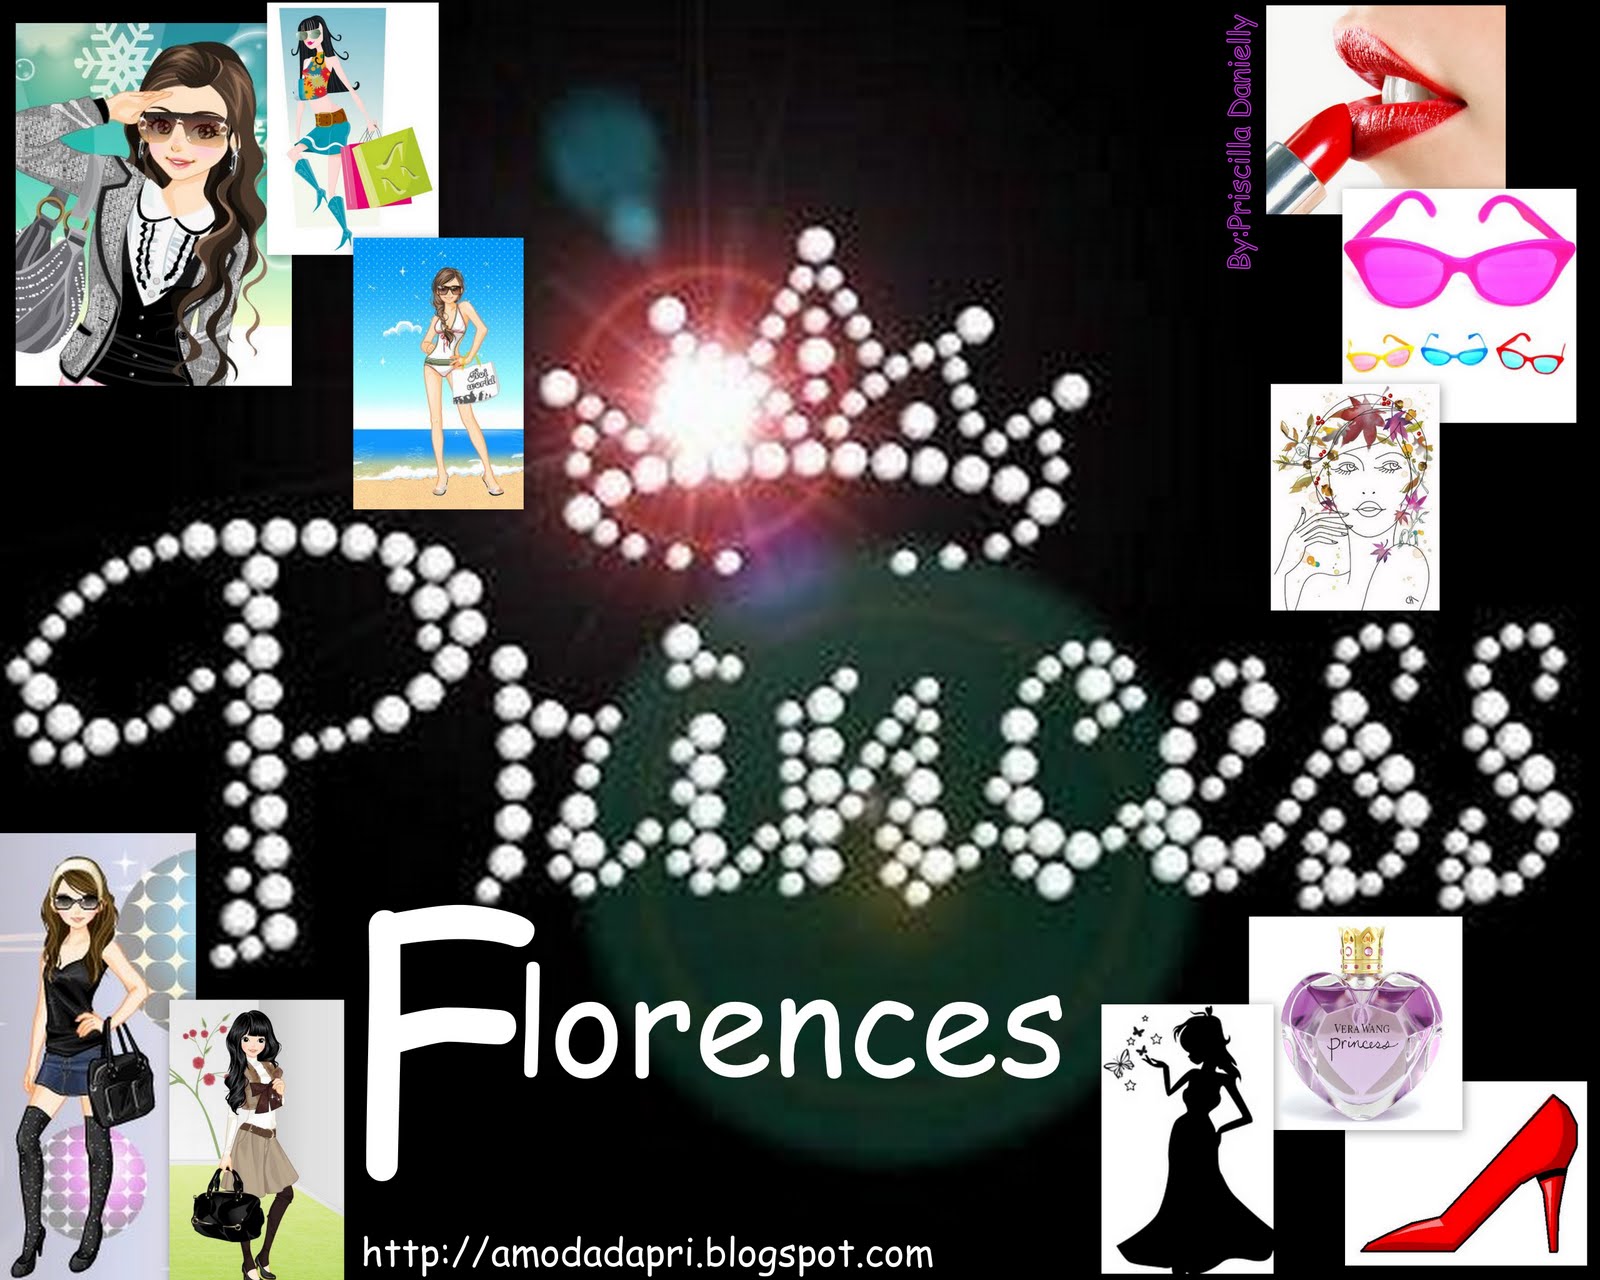 Princess Florences